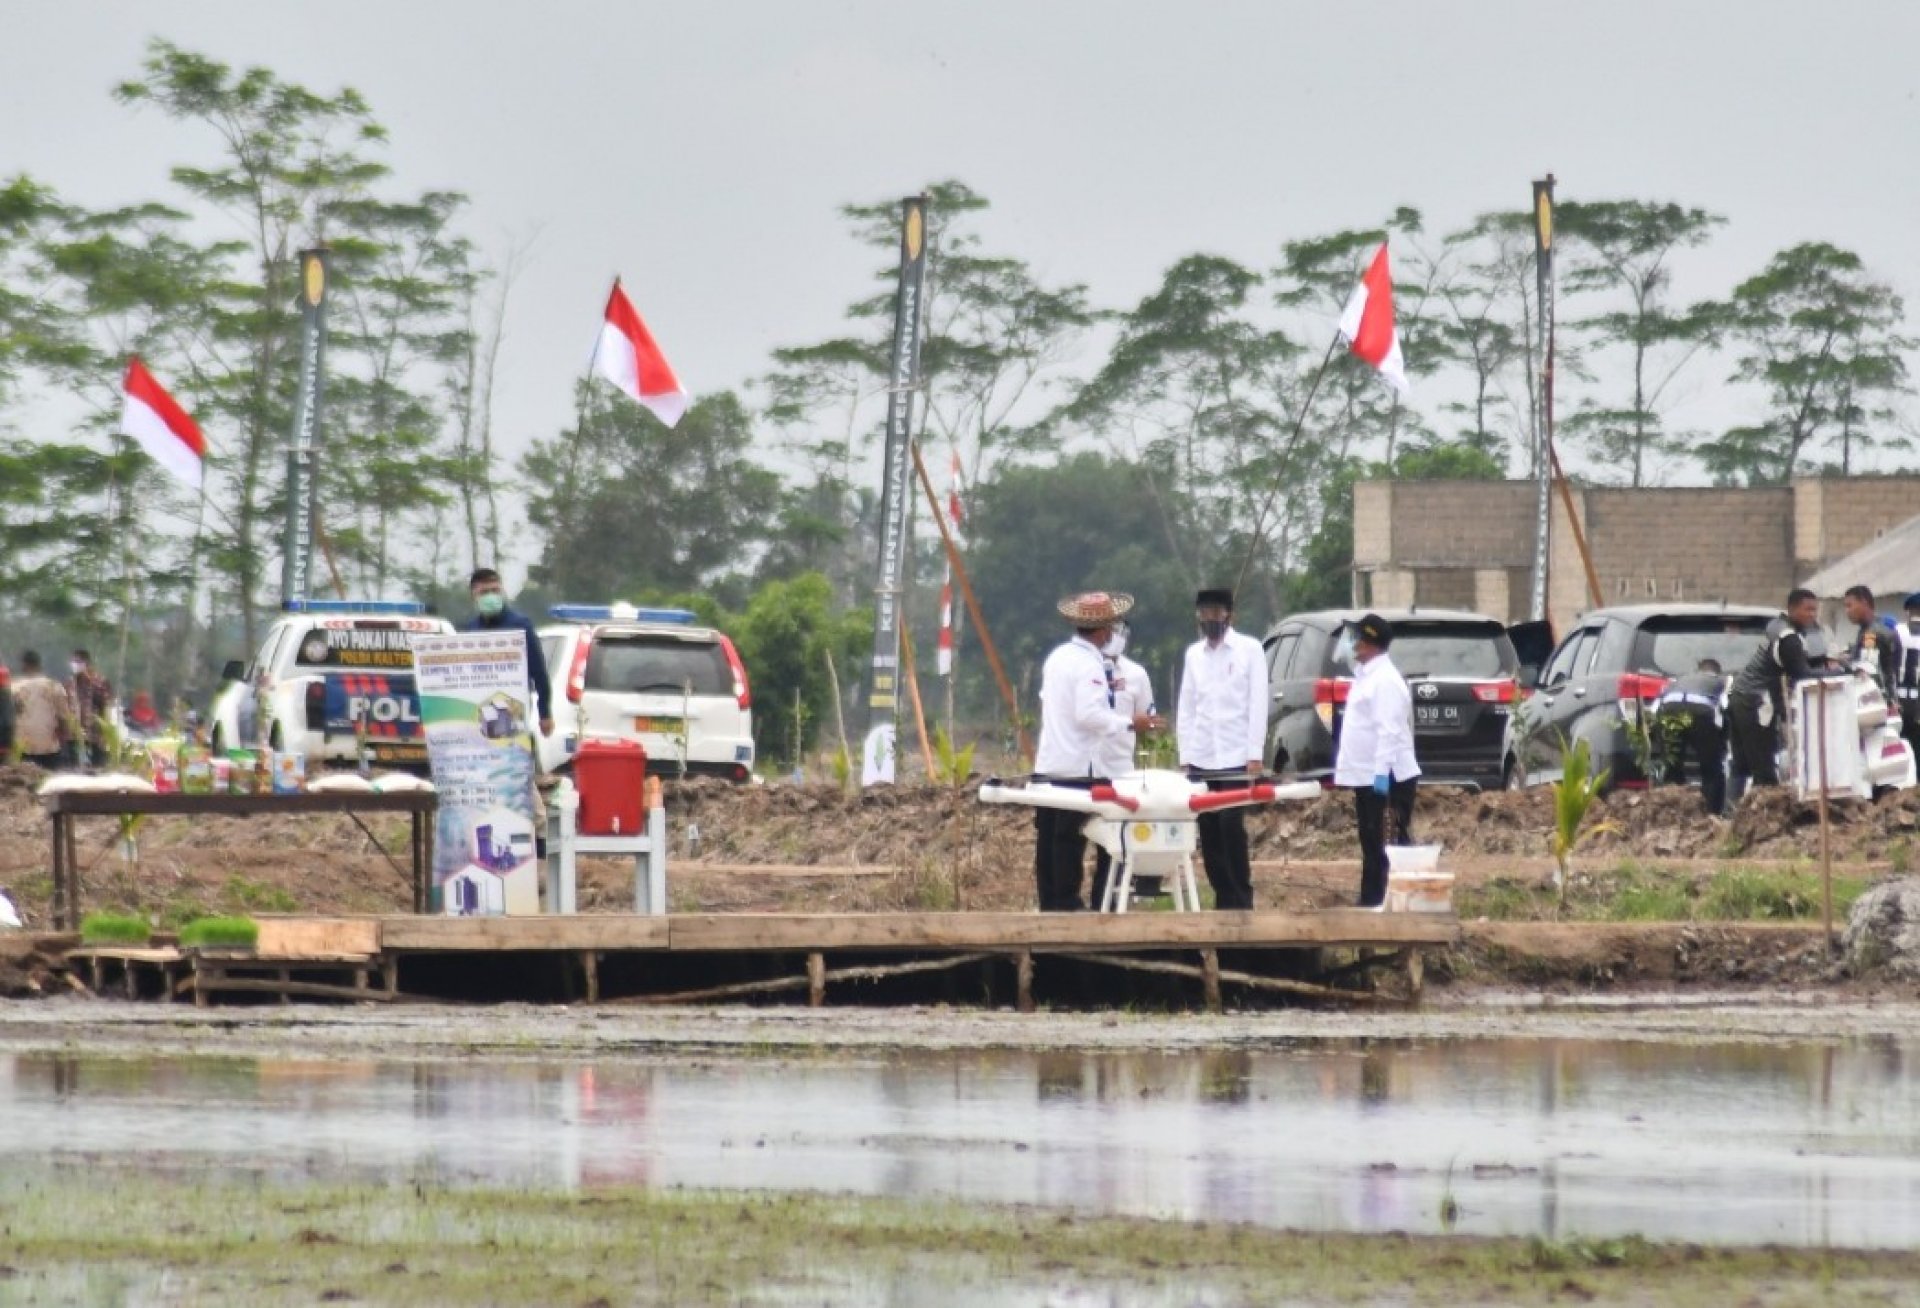 Plt. Gubernur Dampingi Presiden Joko Widodo Tinjau Lokasi Tanam Perdana Desa Belanti Siam, Tandai Dimulainya Program Food Estate di Kalteng